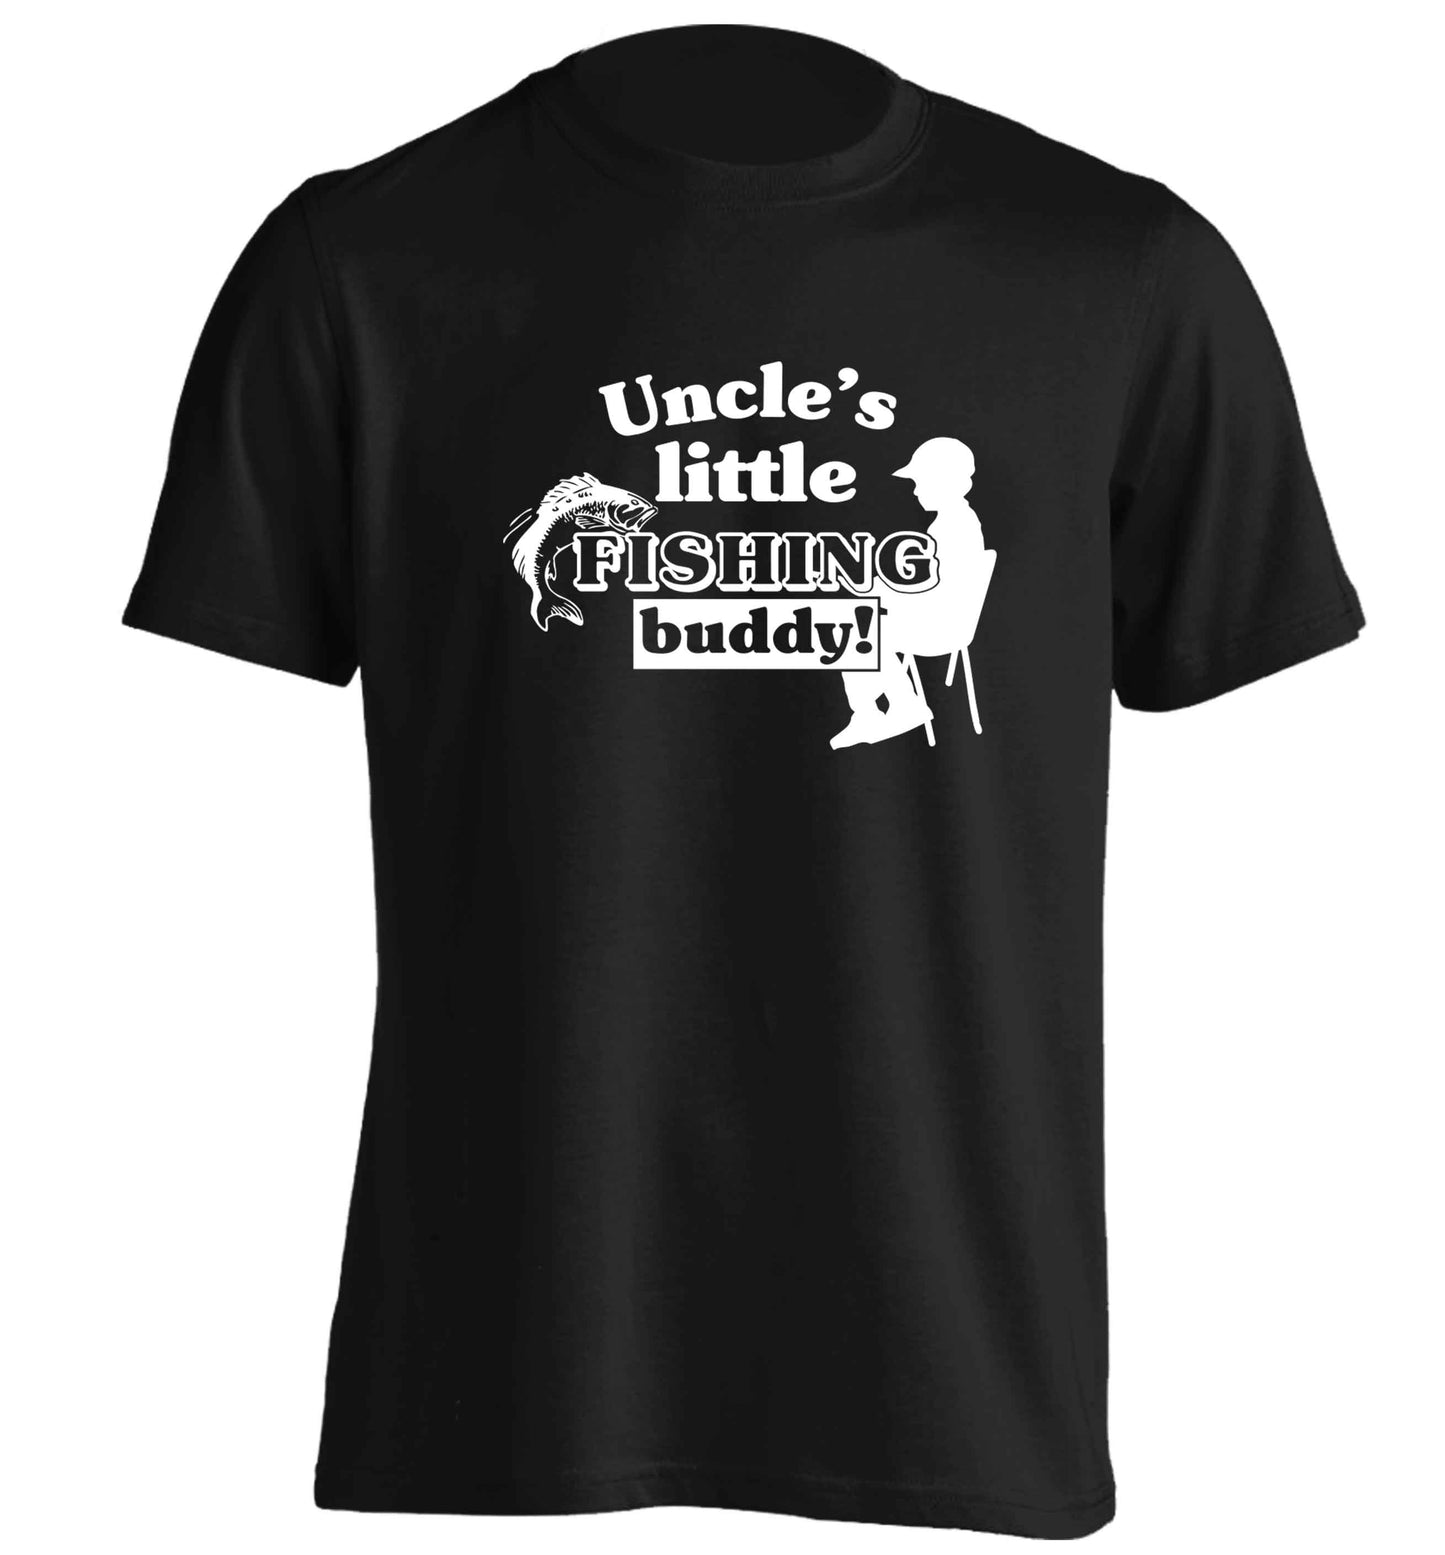 Uncle's little fishing buddy adults unisex black Tshirt 2XL